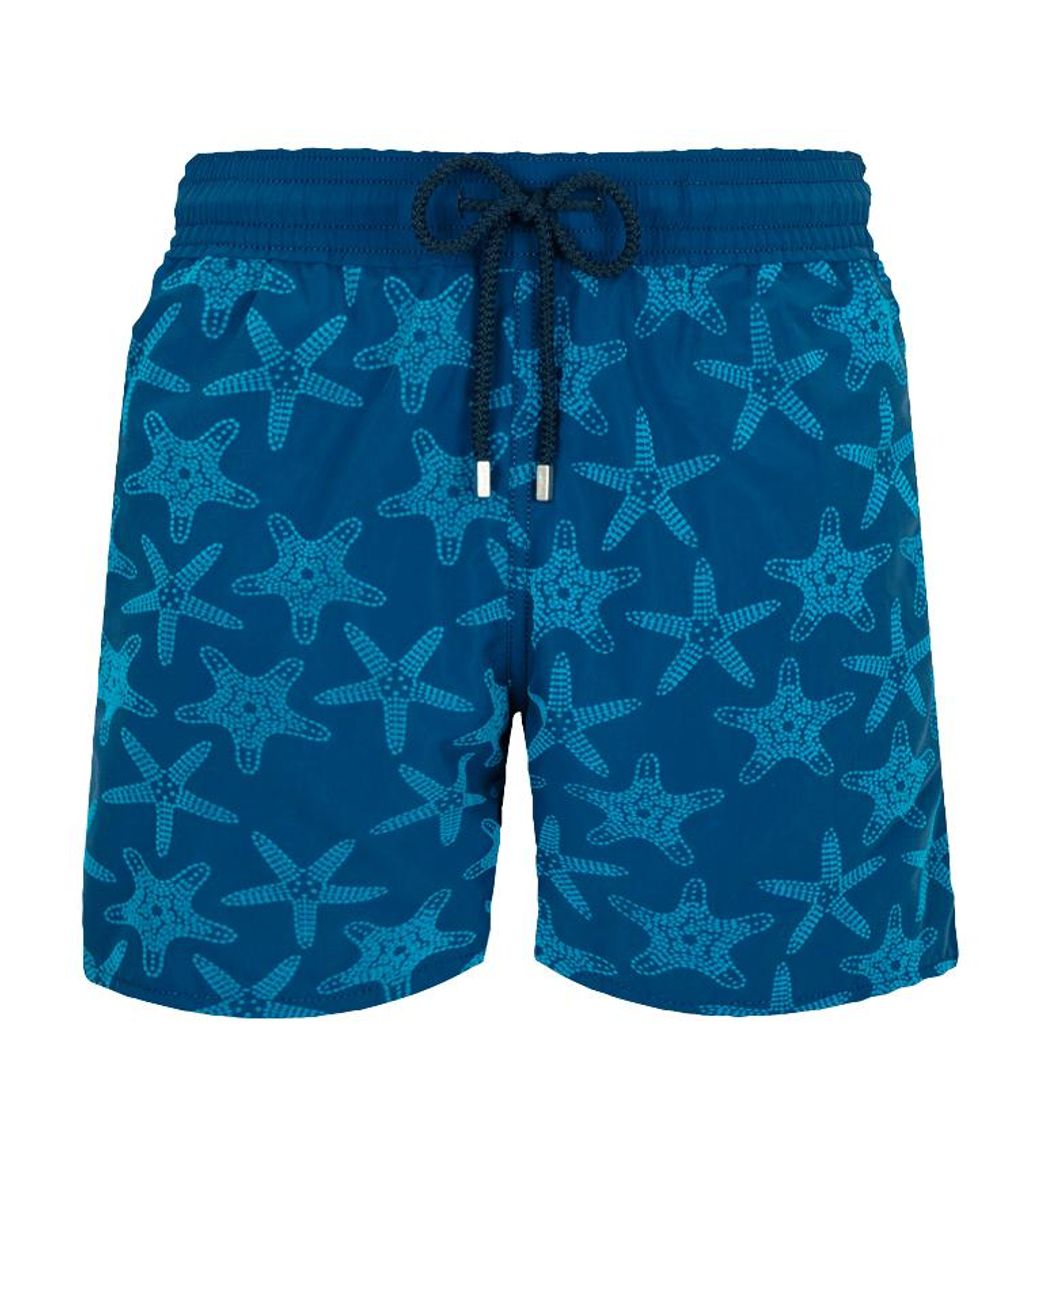 Vilebrequin Synthetic Swimwear in Blue for Men - Lyst